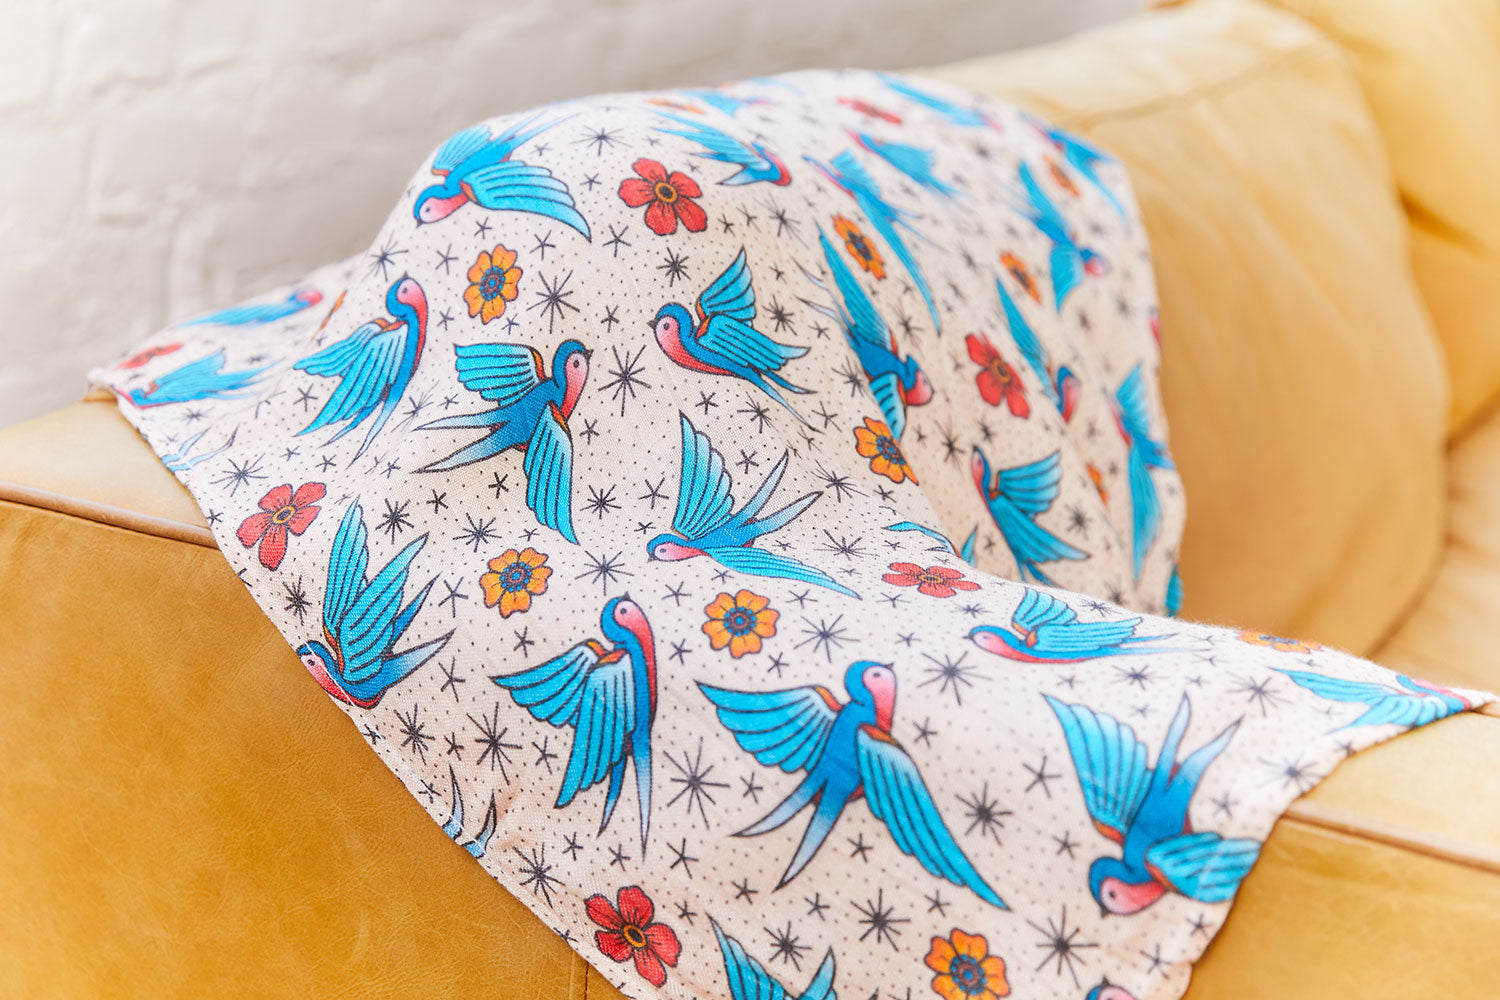 Bird print baby blanket closeup of bamboo fabric